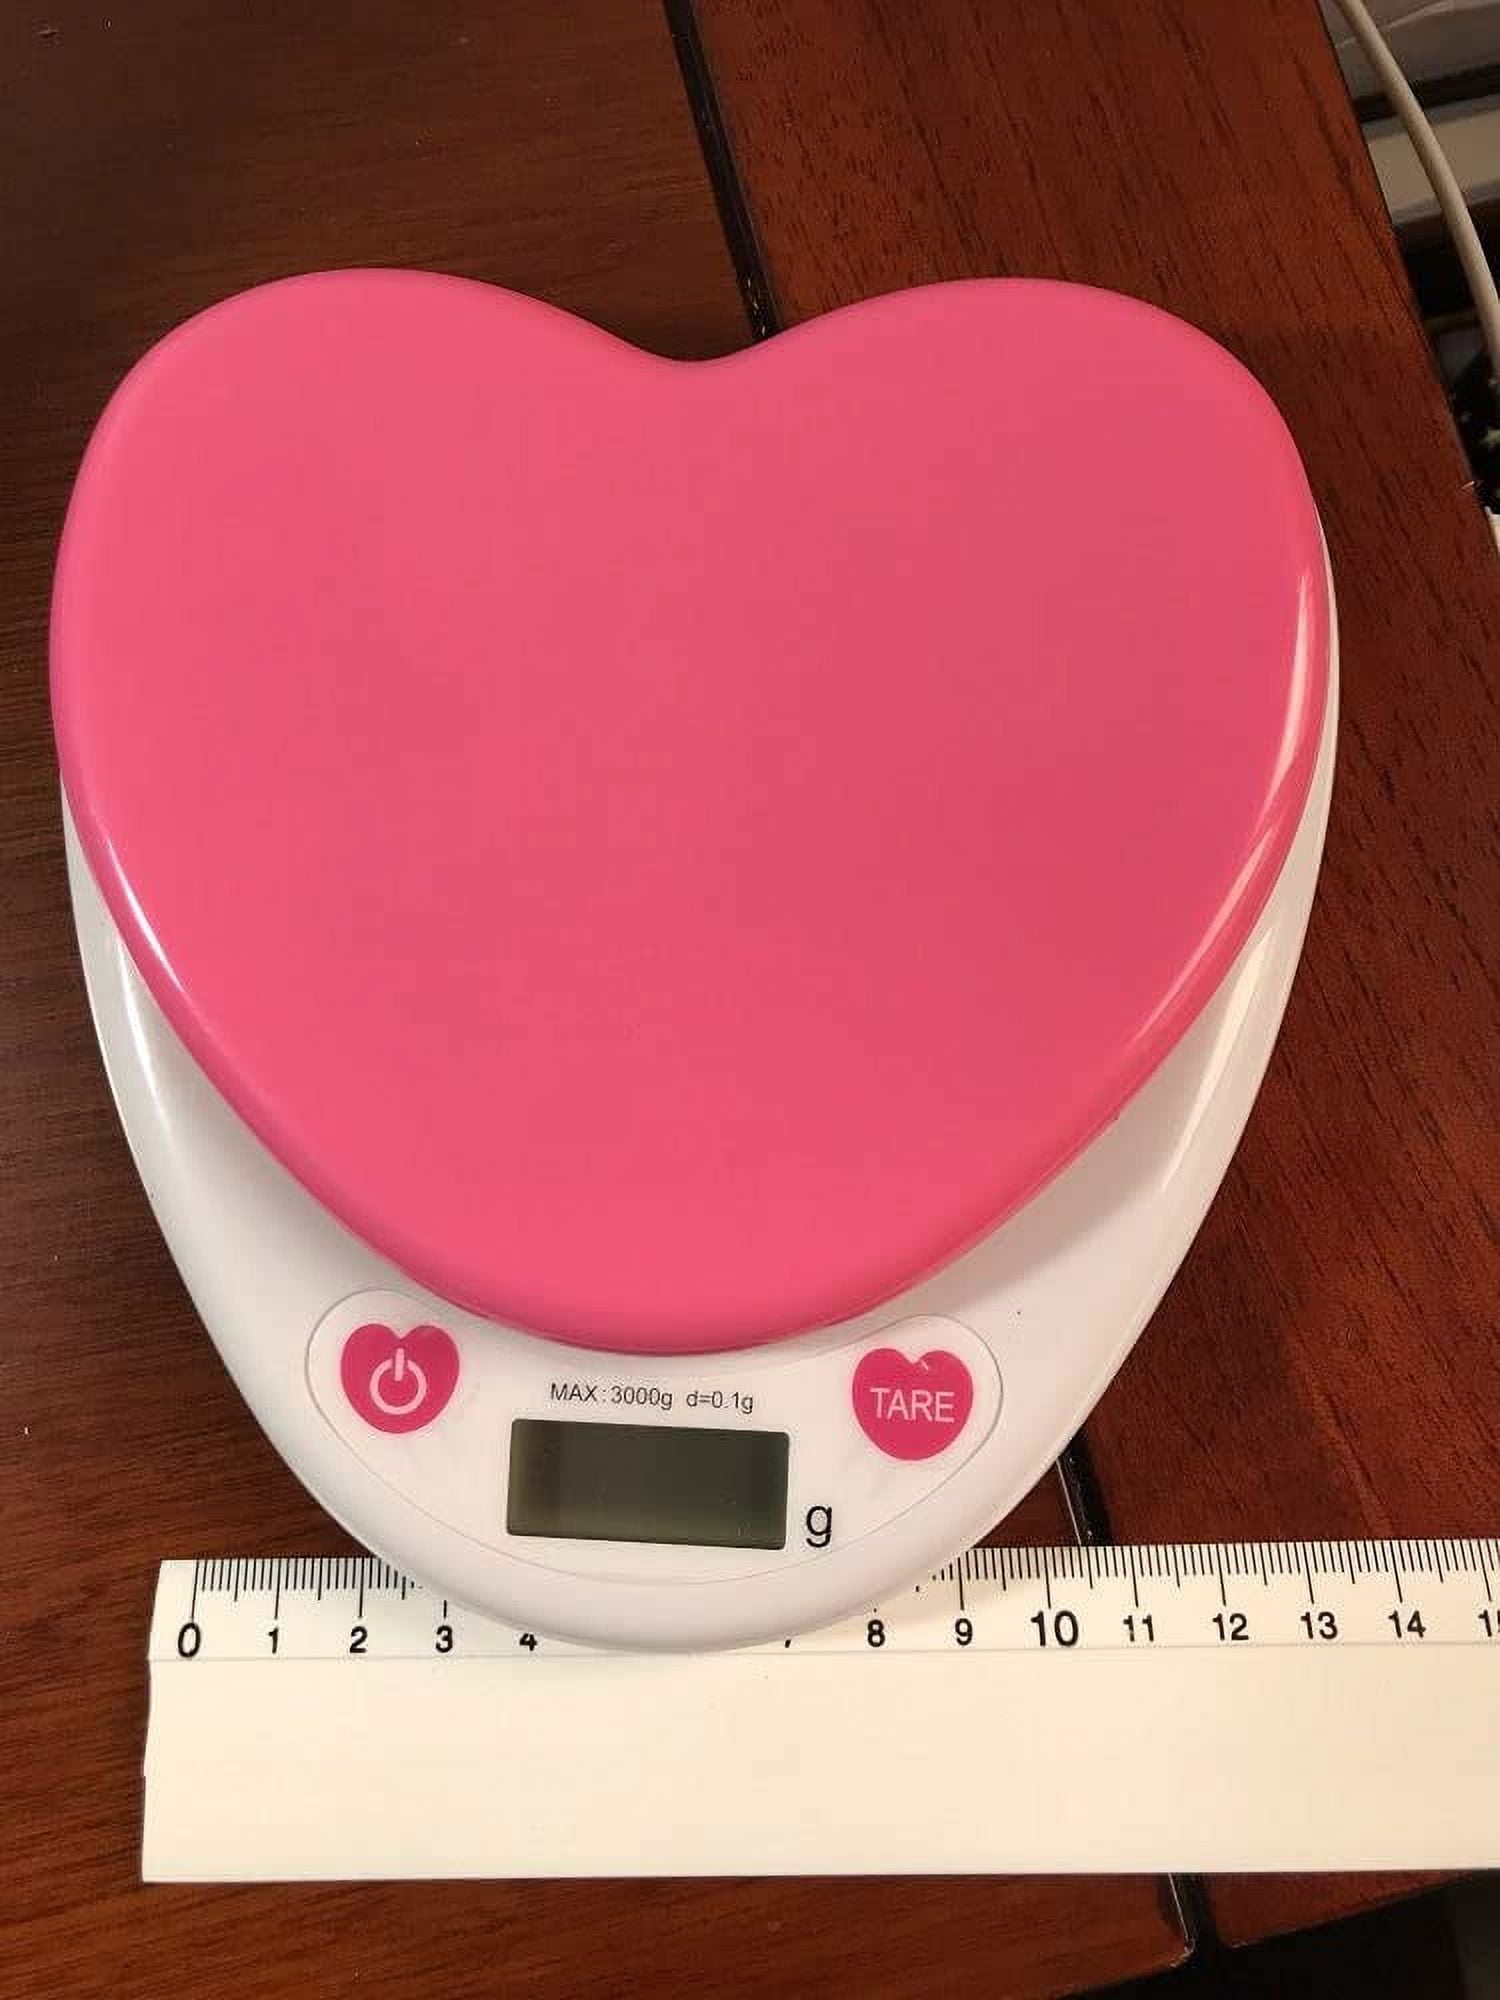 Pink Mini Pocket Jewelry Weight Scale - China Digital Scale